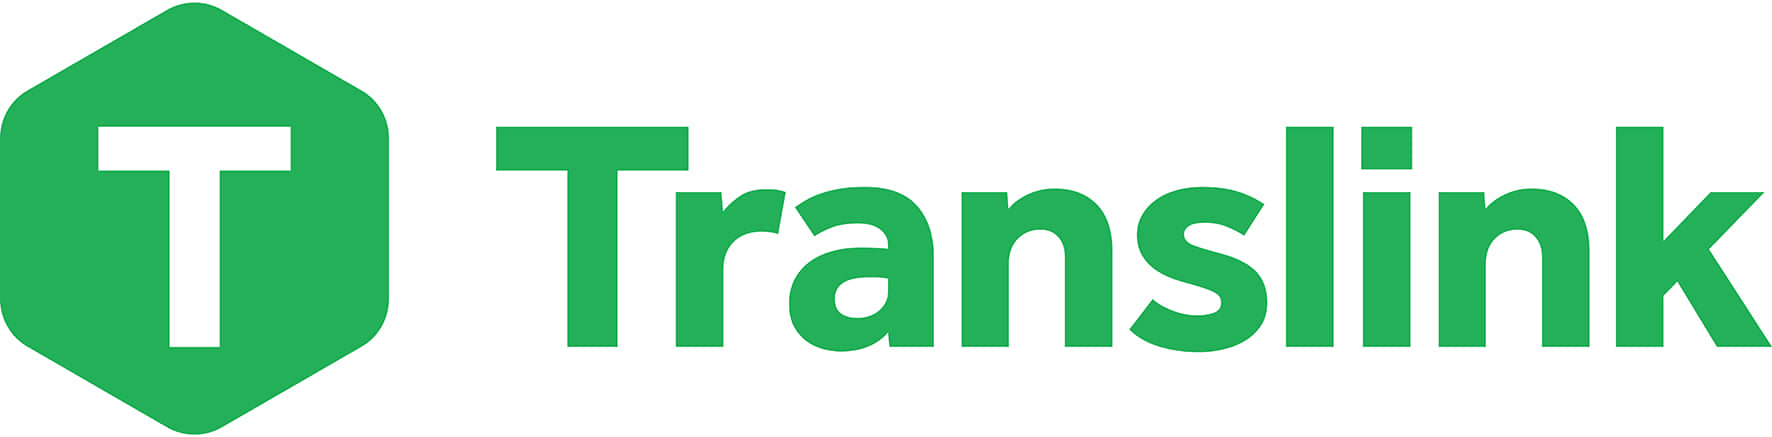 translink-hexagon-logo-_327-brand-new-may-2021.jpg